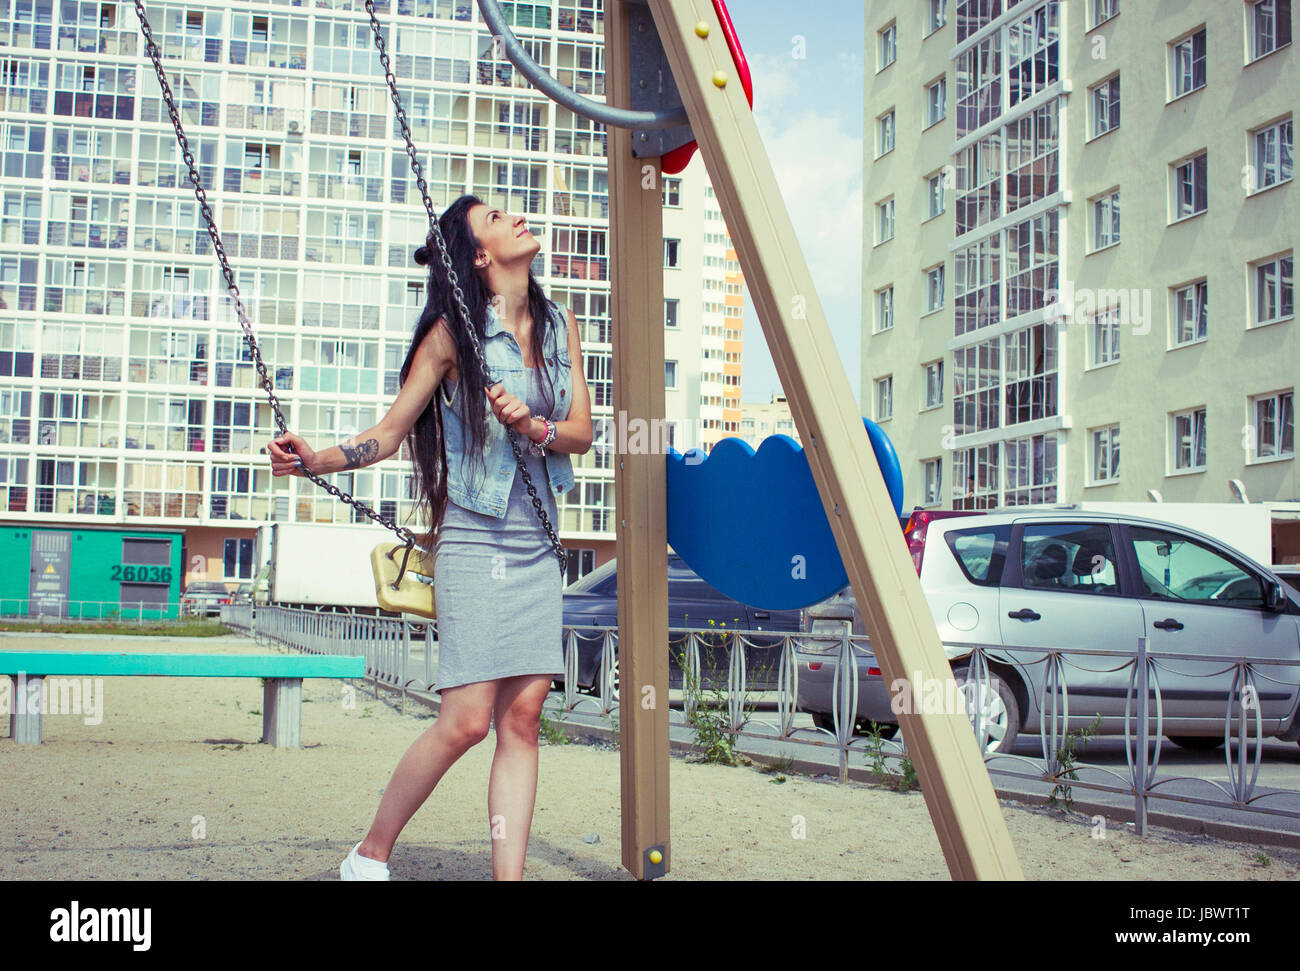 Woman on playground swing Stock Photo